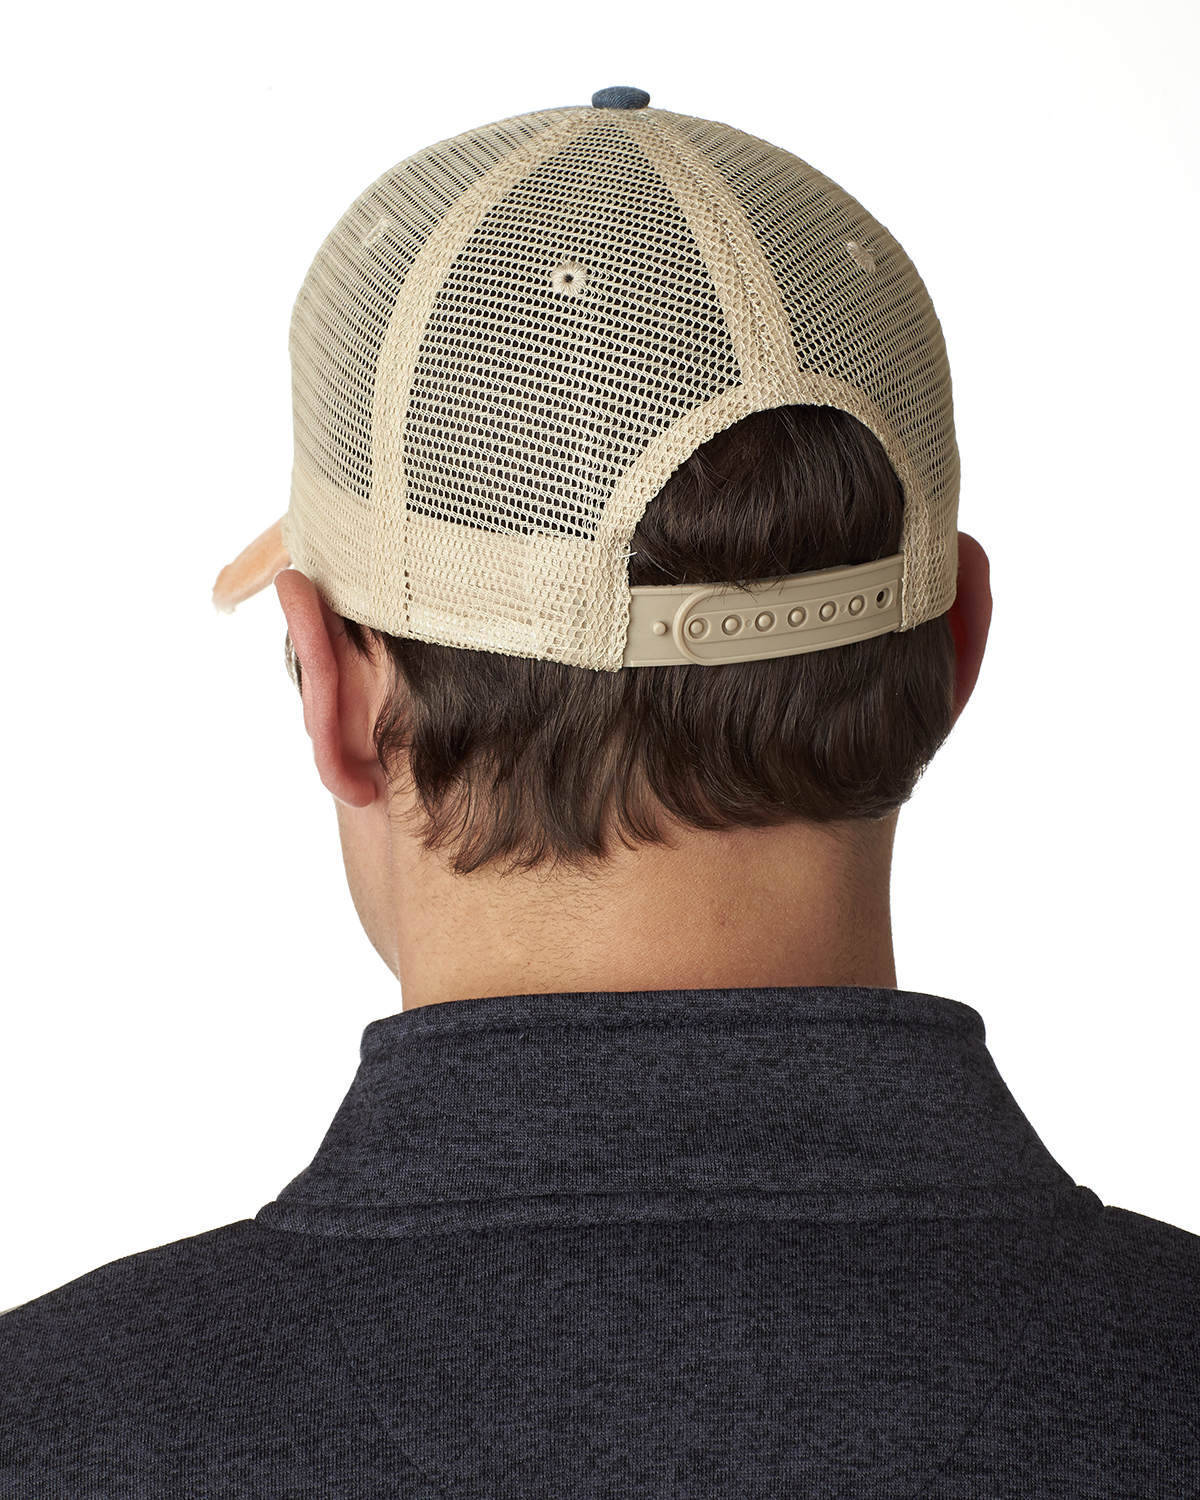 South Dakota Hat - Distressed Snapback Trucker Hat - South Dakota State Outline - Many Colors Available